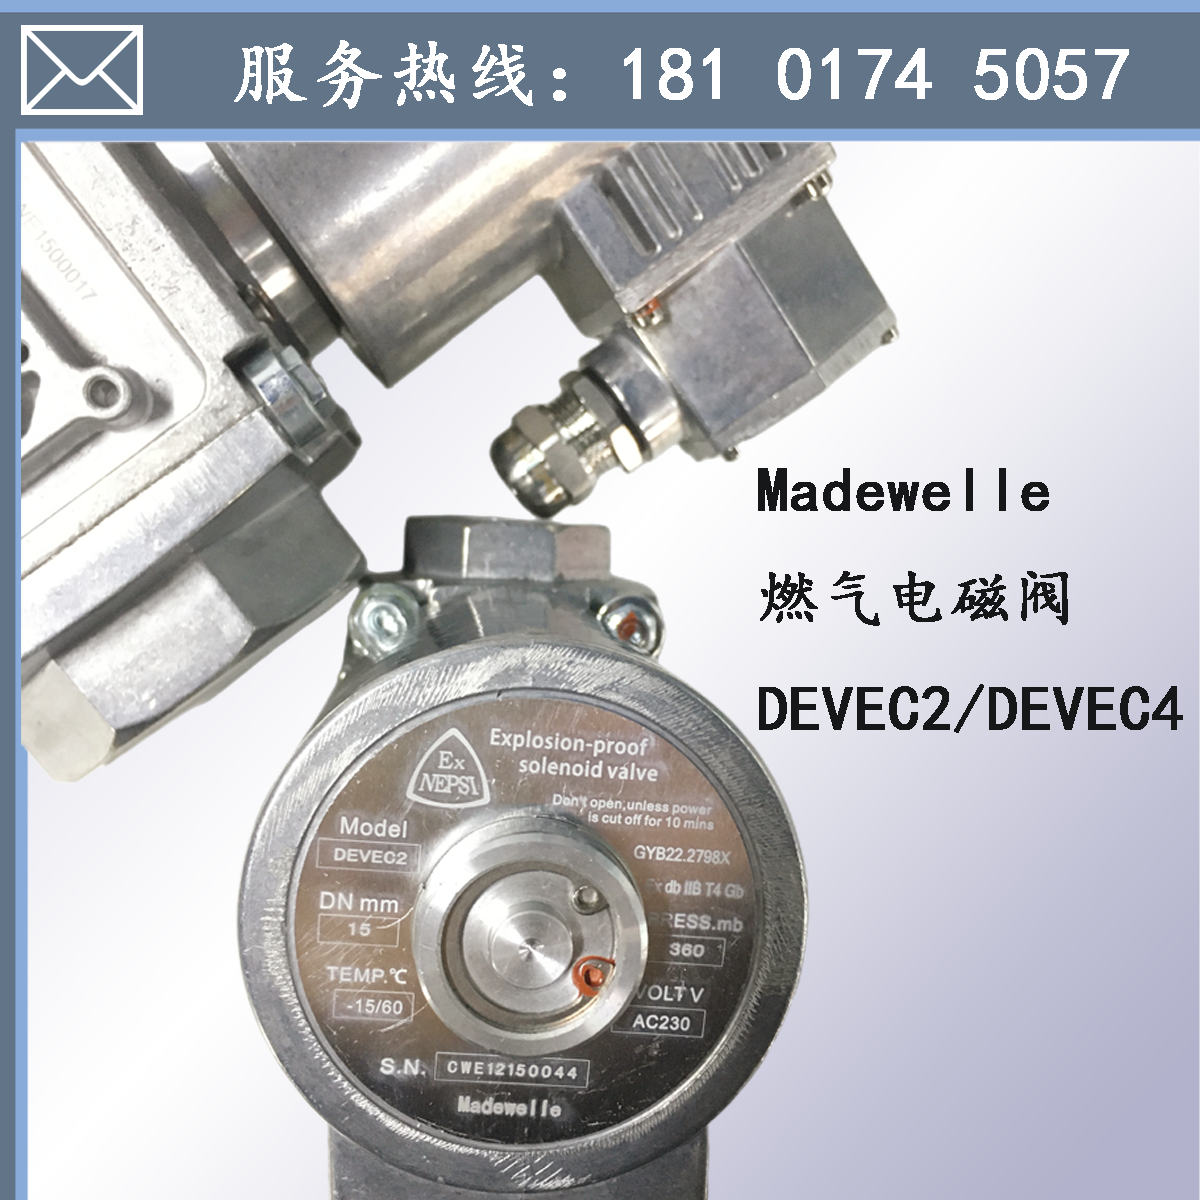 Madewelle燃气阀DEVEC2/DEVEC4防**电磁阀